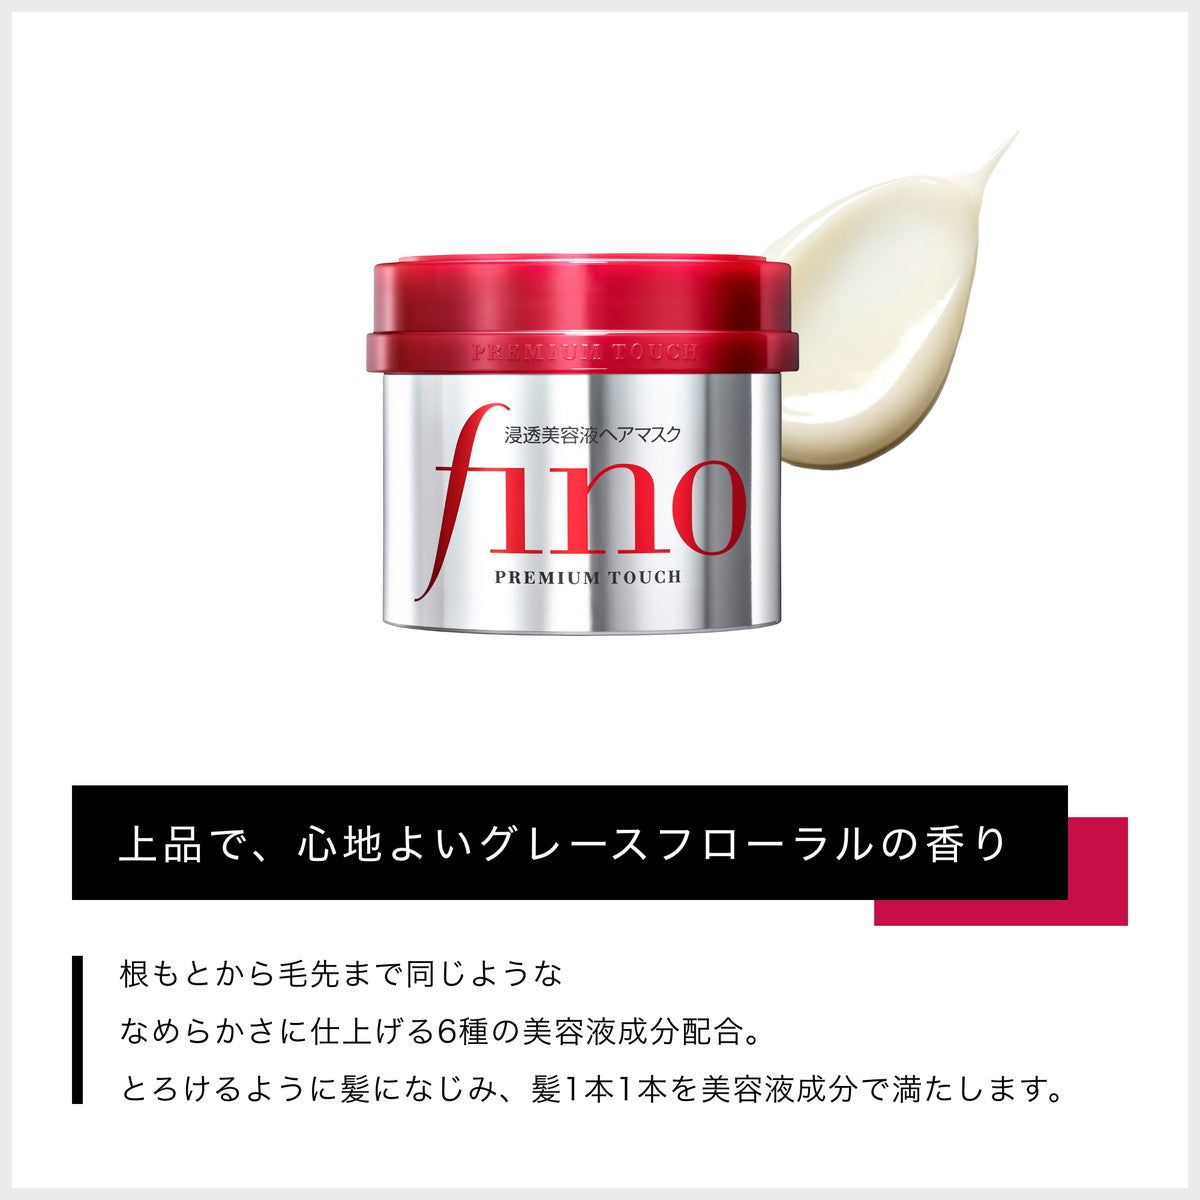 Shiseido Fino Premium Touch Hair Mask  230g